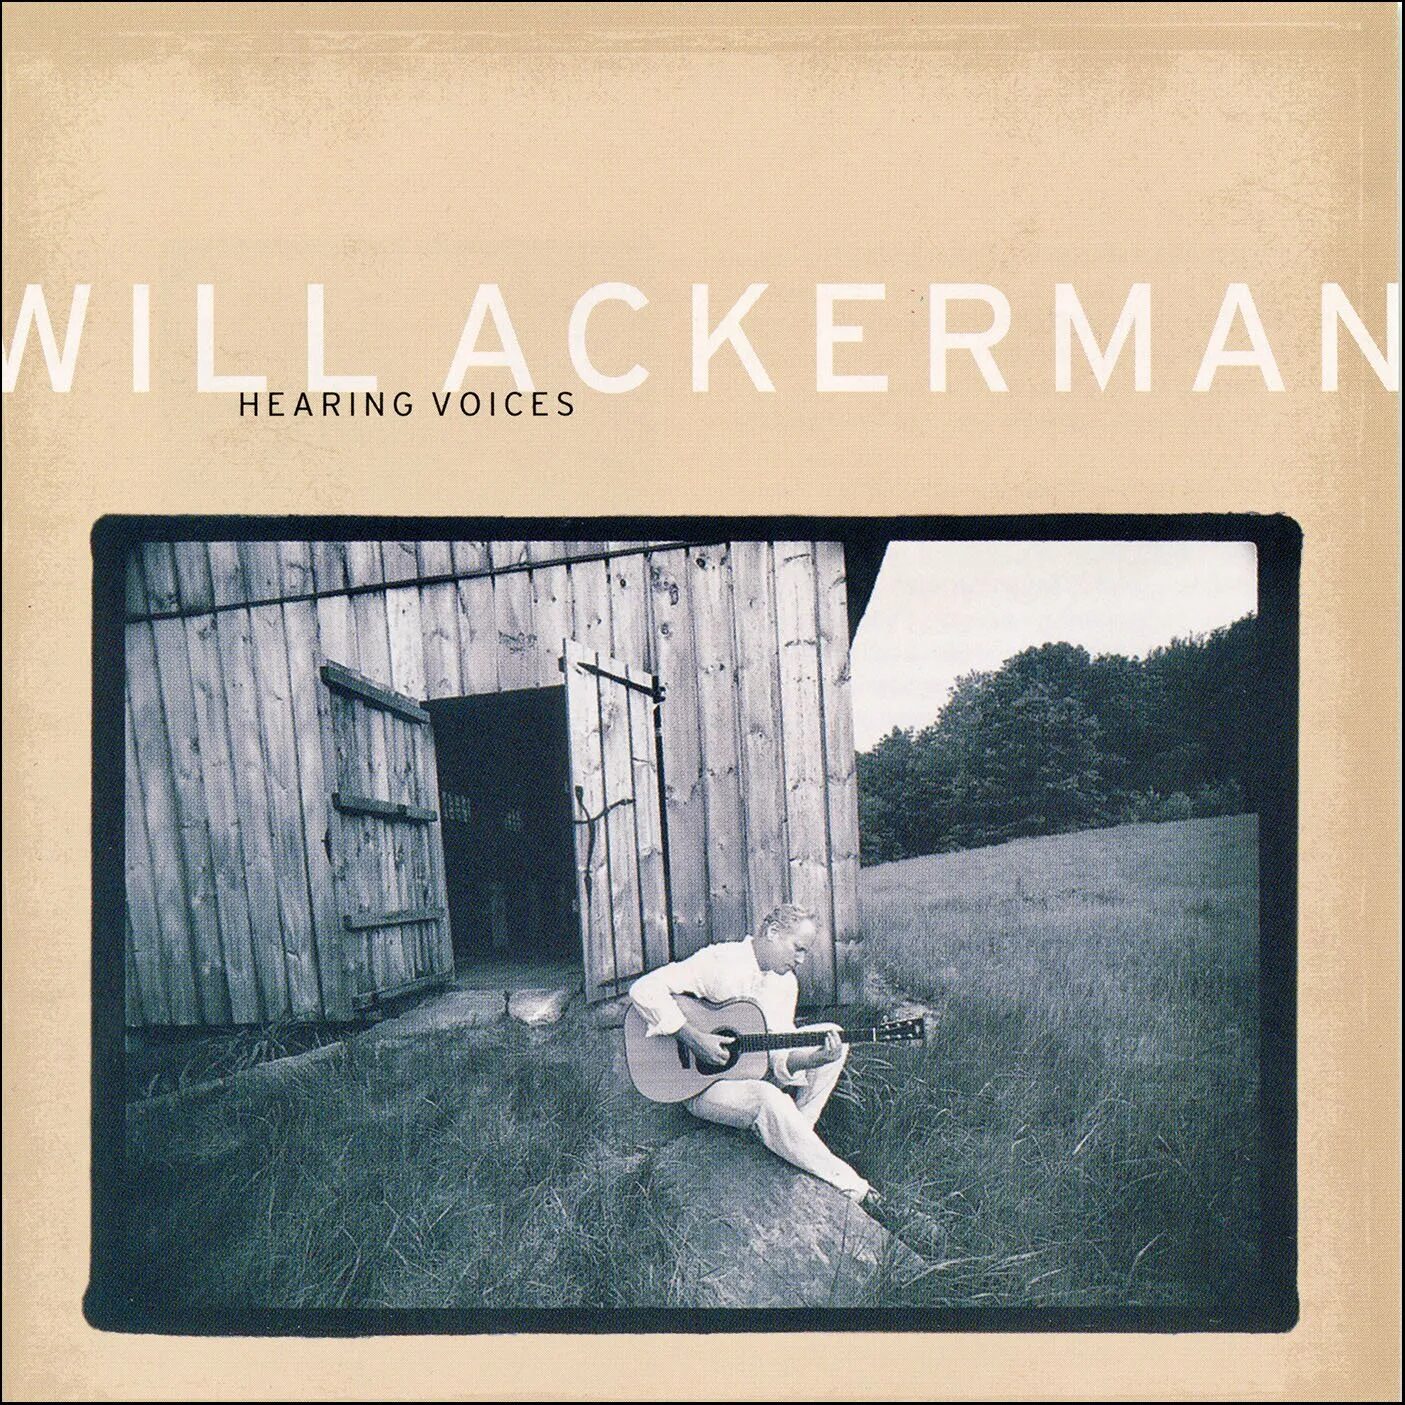 Will Ackerman. Voice hearing. Гр Аккерман альбомы. William Ackerman Passage. He heard the voices